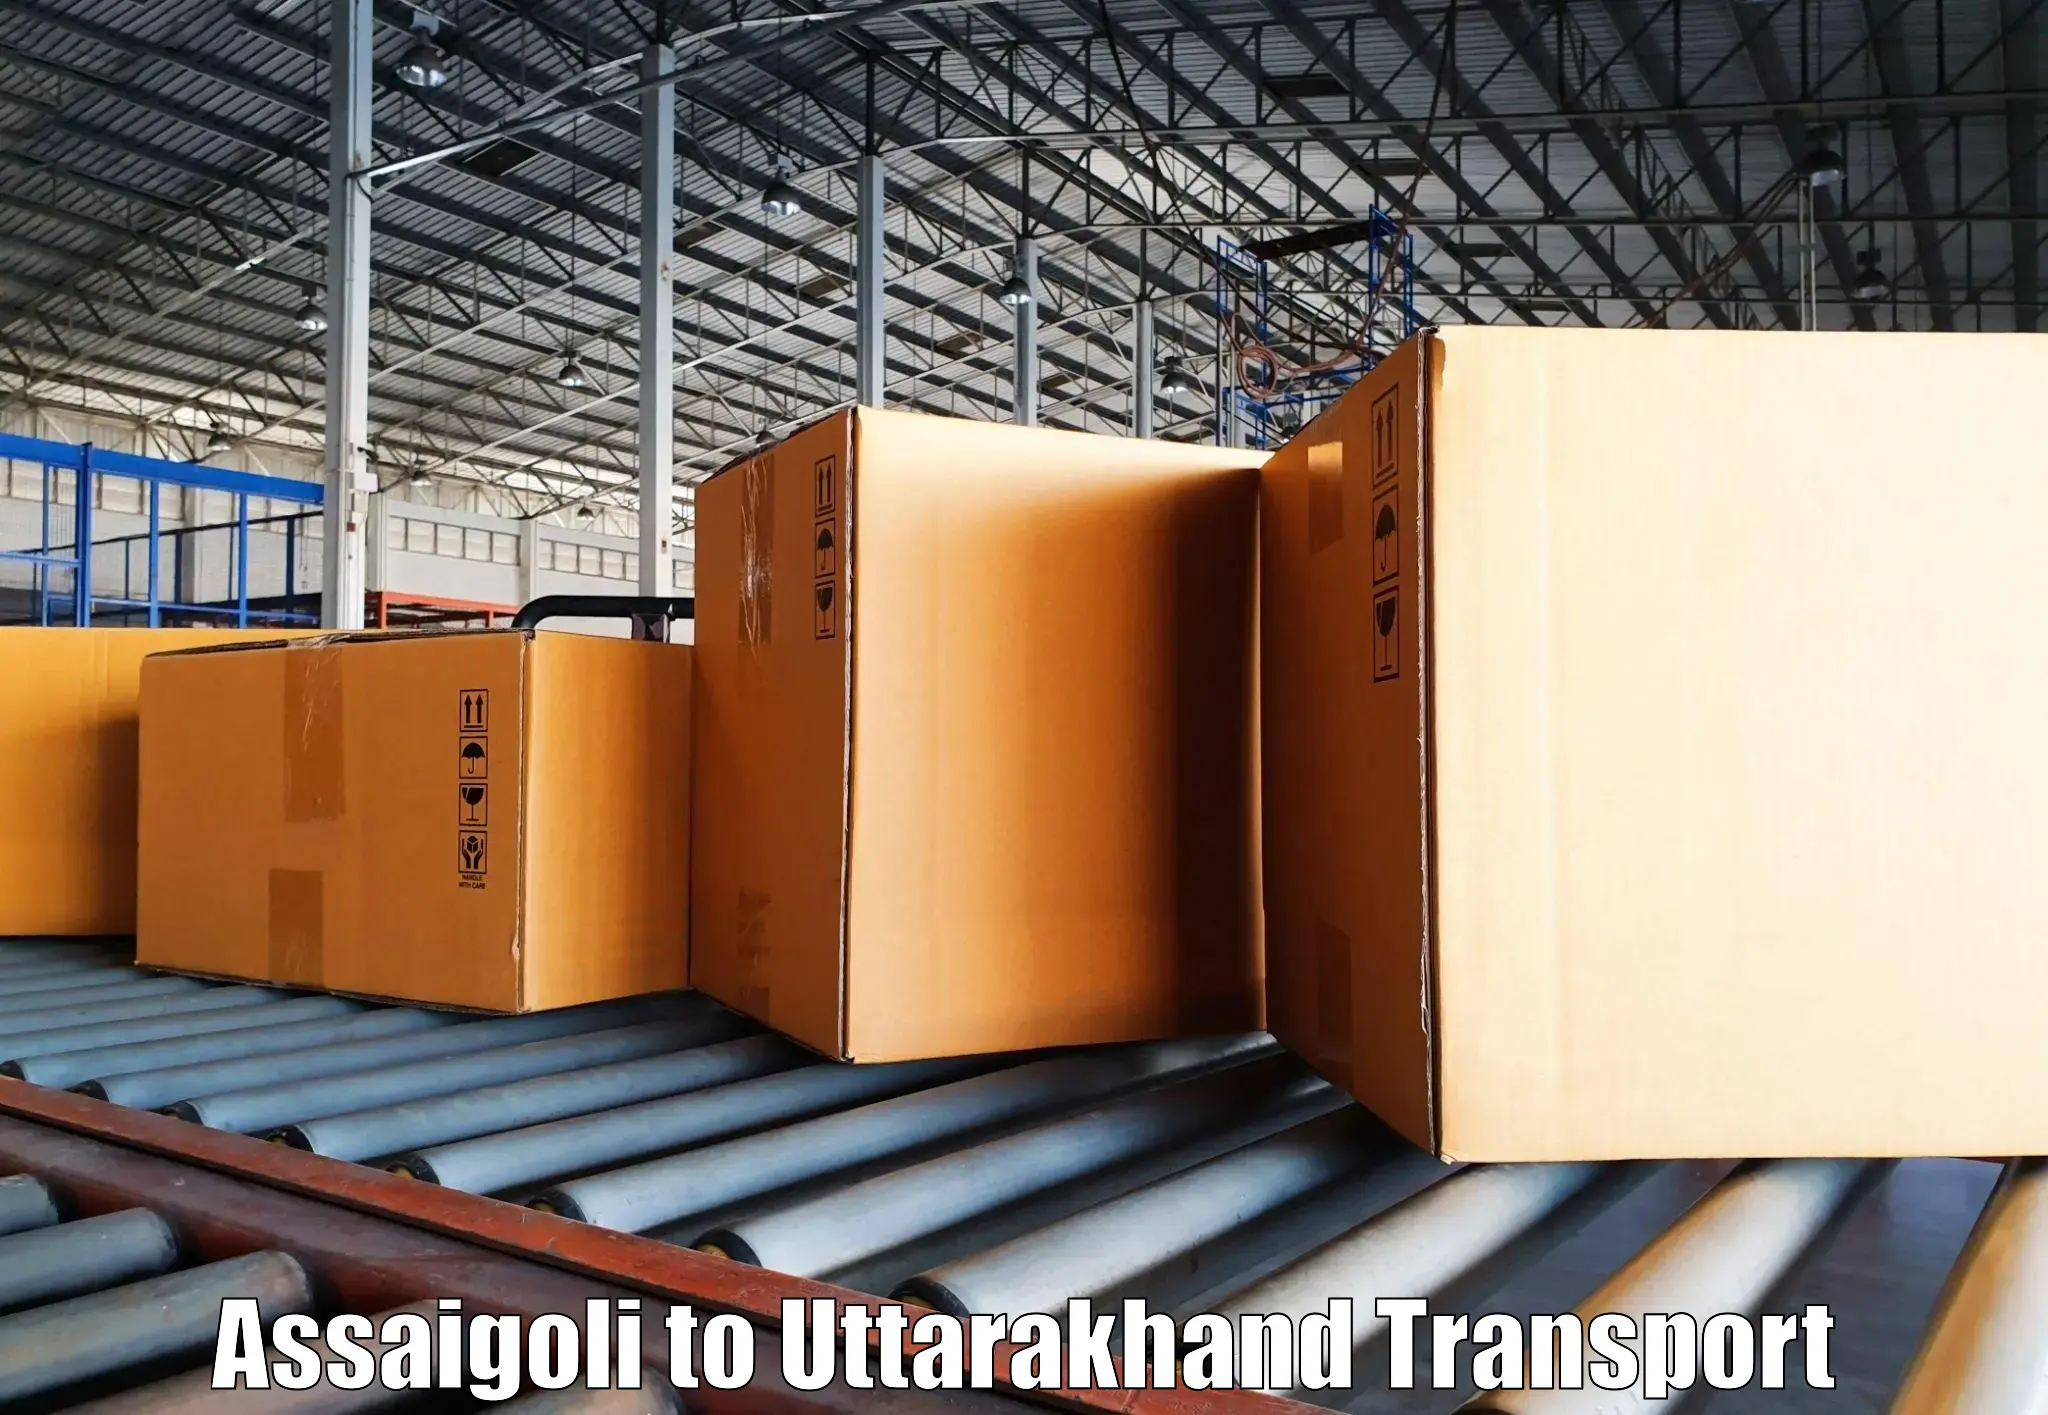 Two wheeler parcel service Assaigoli to Rishikesh